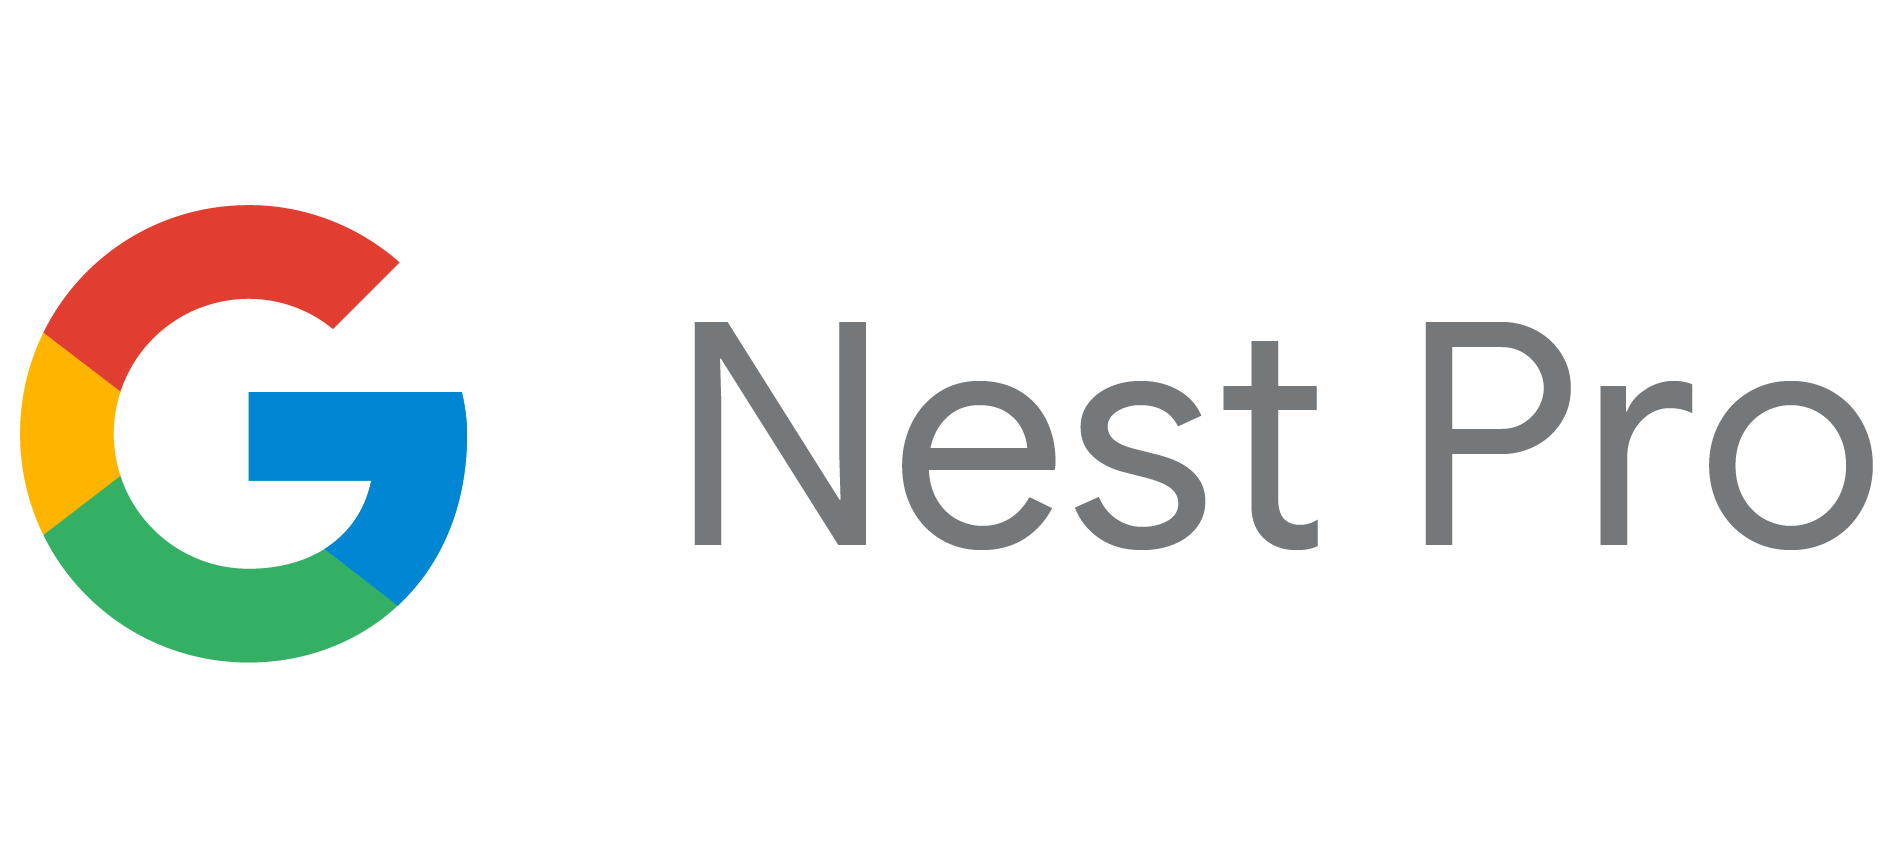 Google NEST